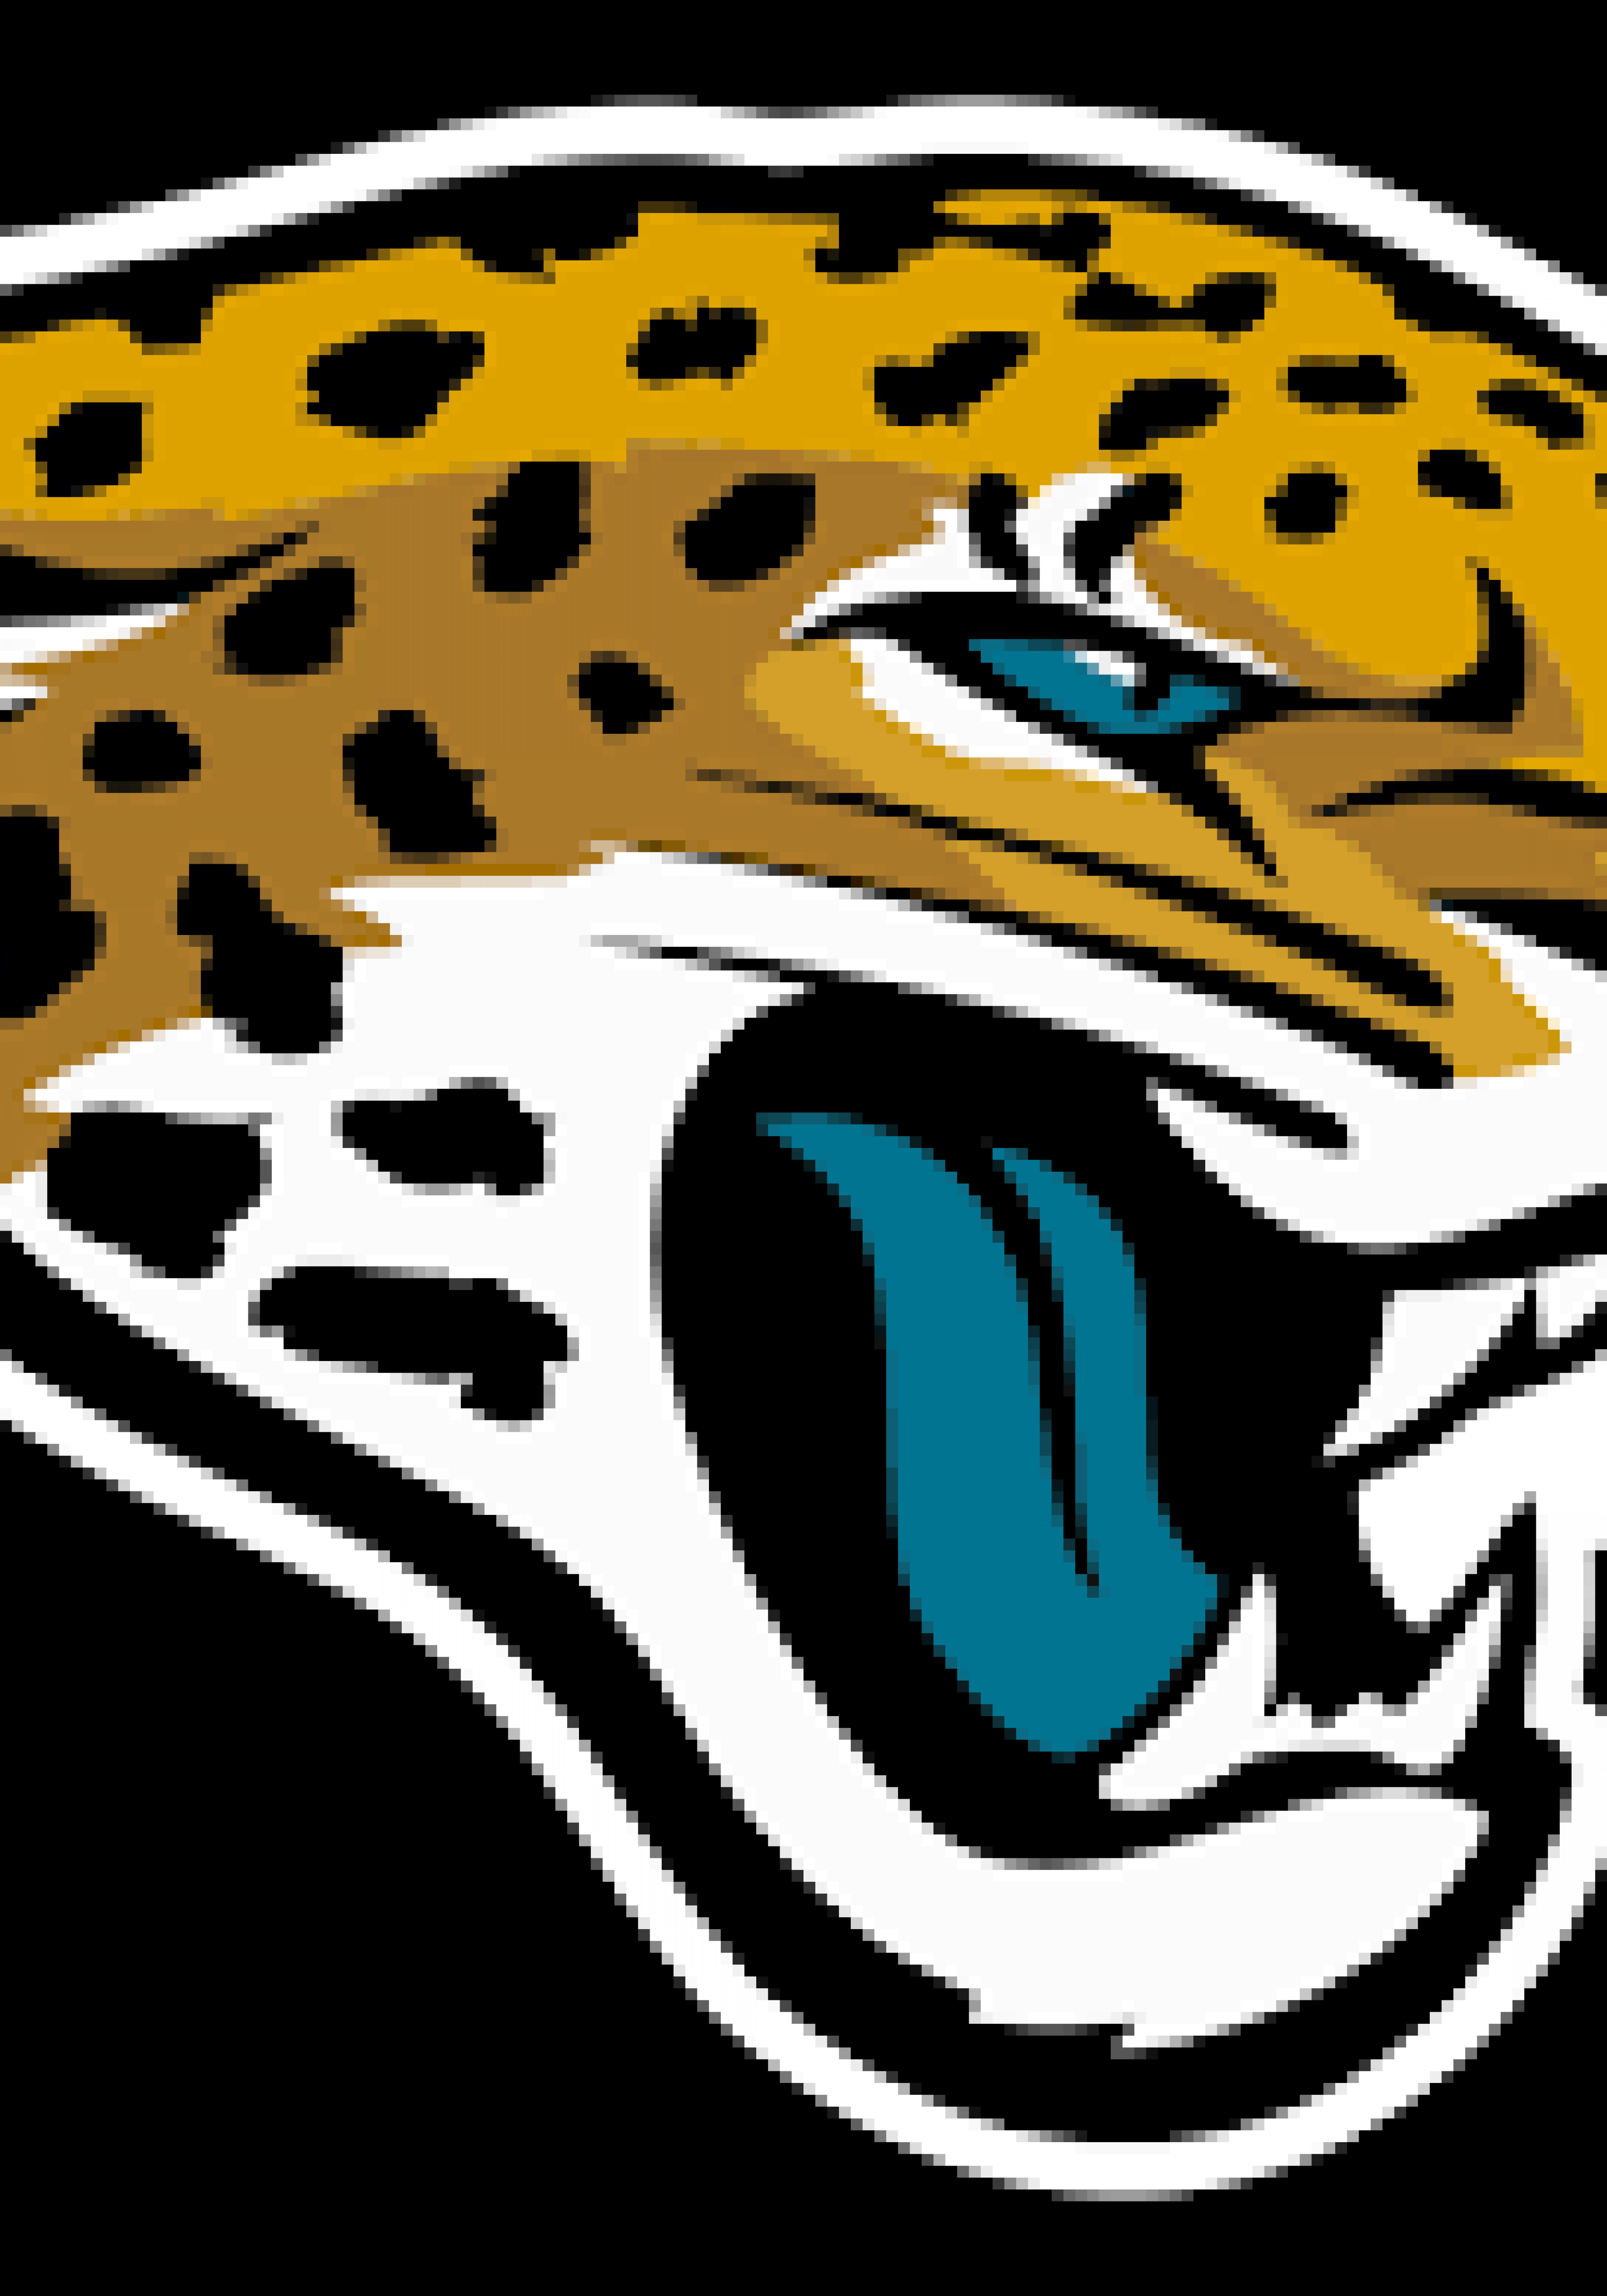 jacksonville jaguars wordmark logo vector